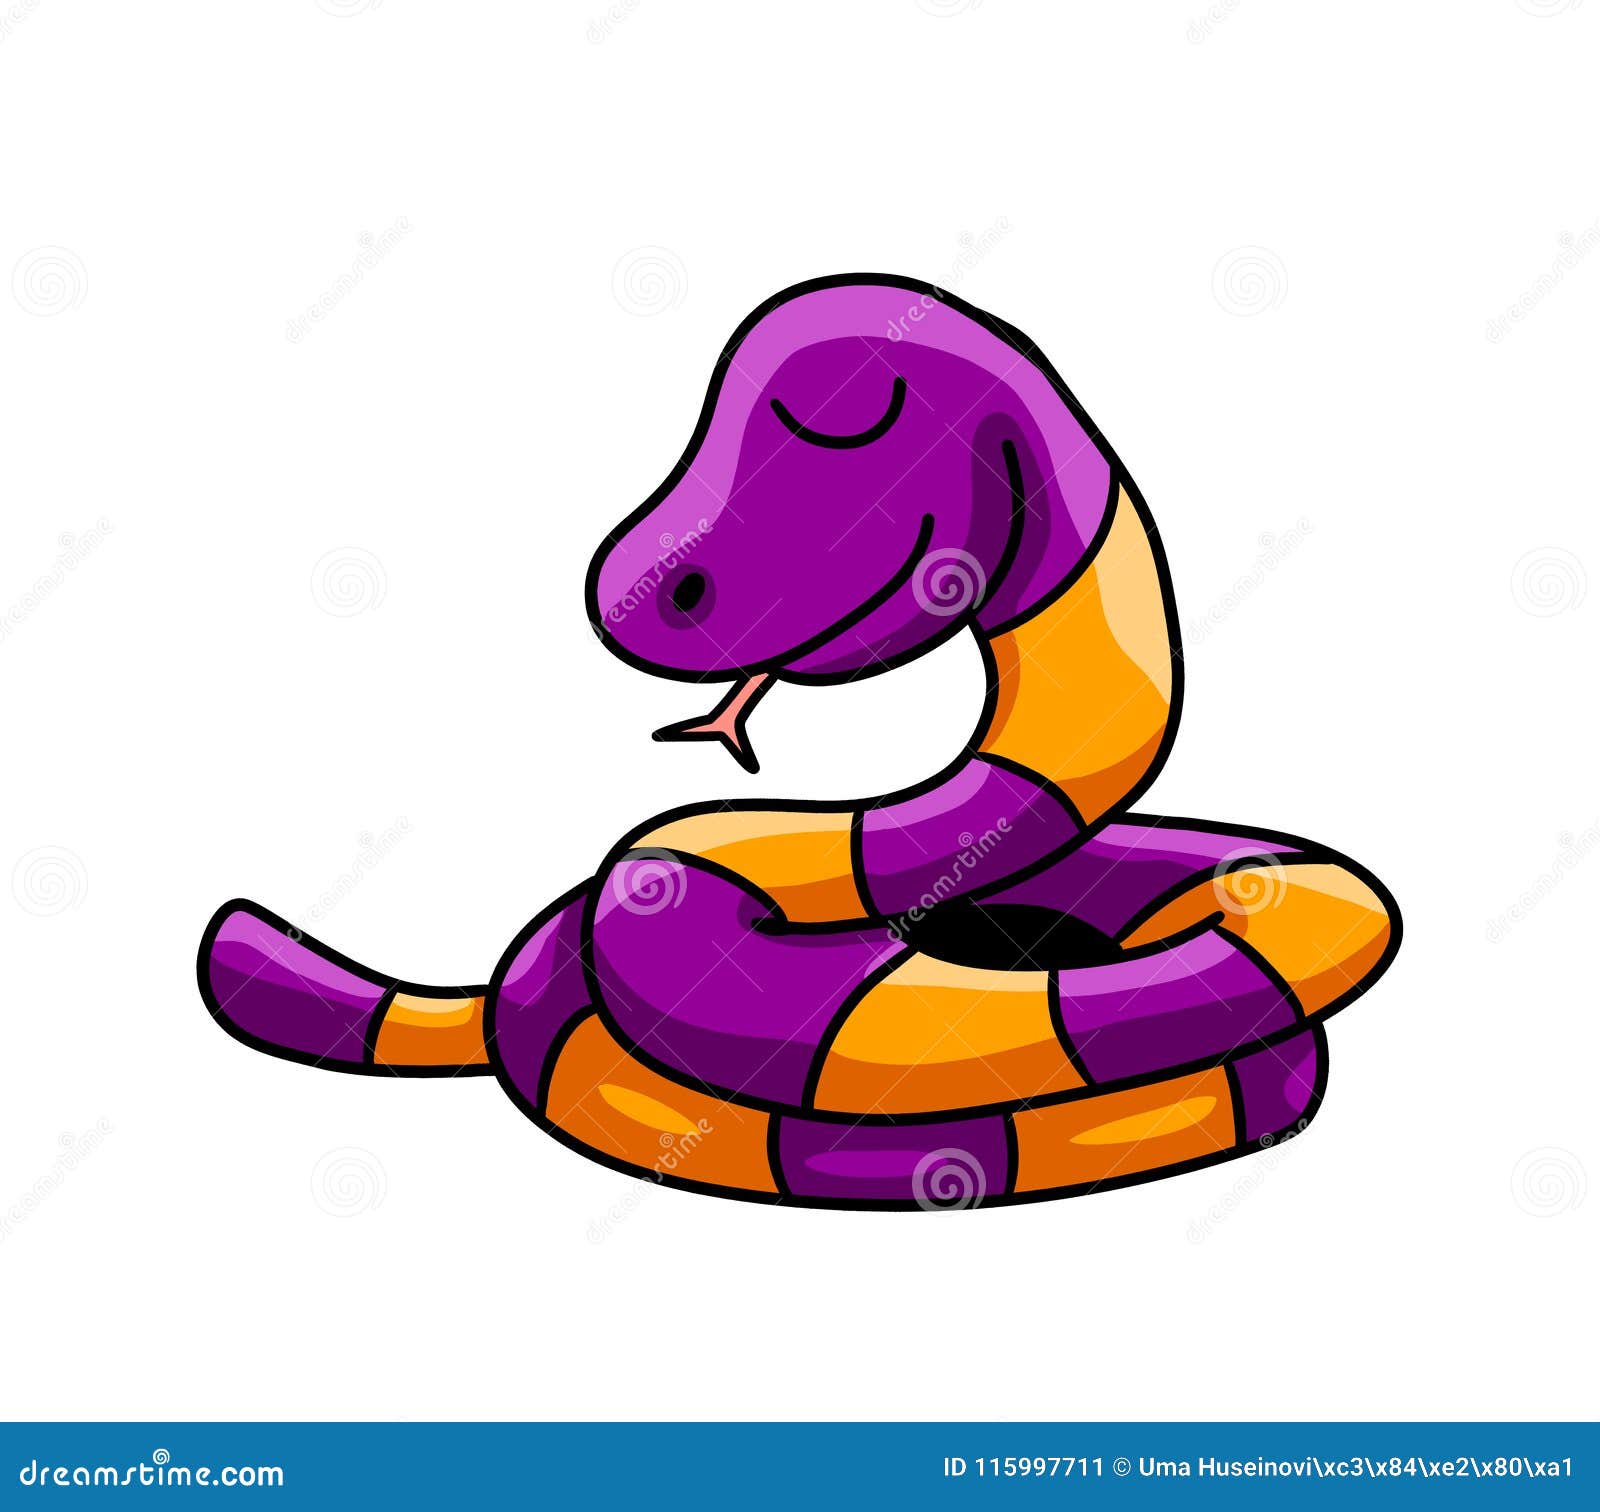 Sleeping Purple Snake stock illustration. Illustration of bite - 115997711